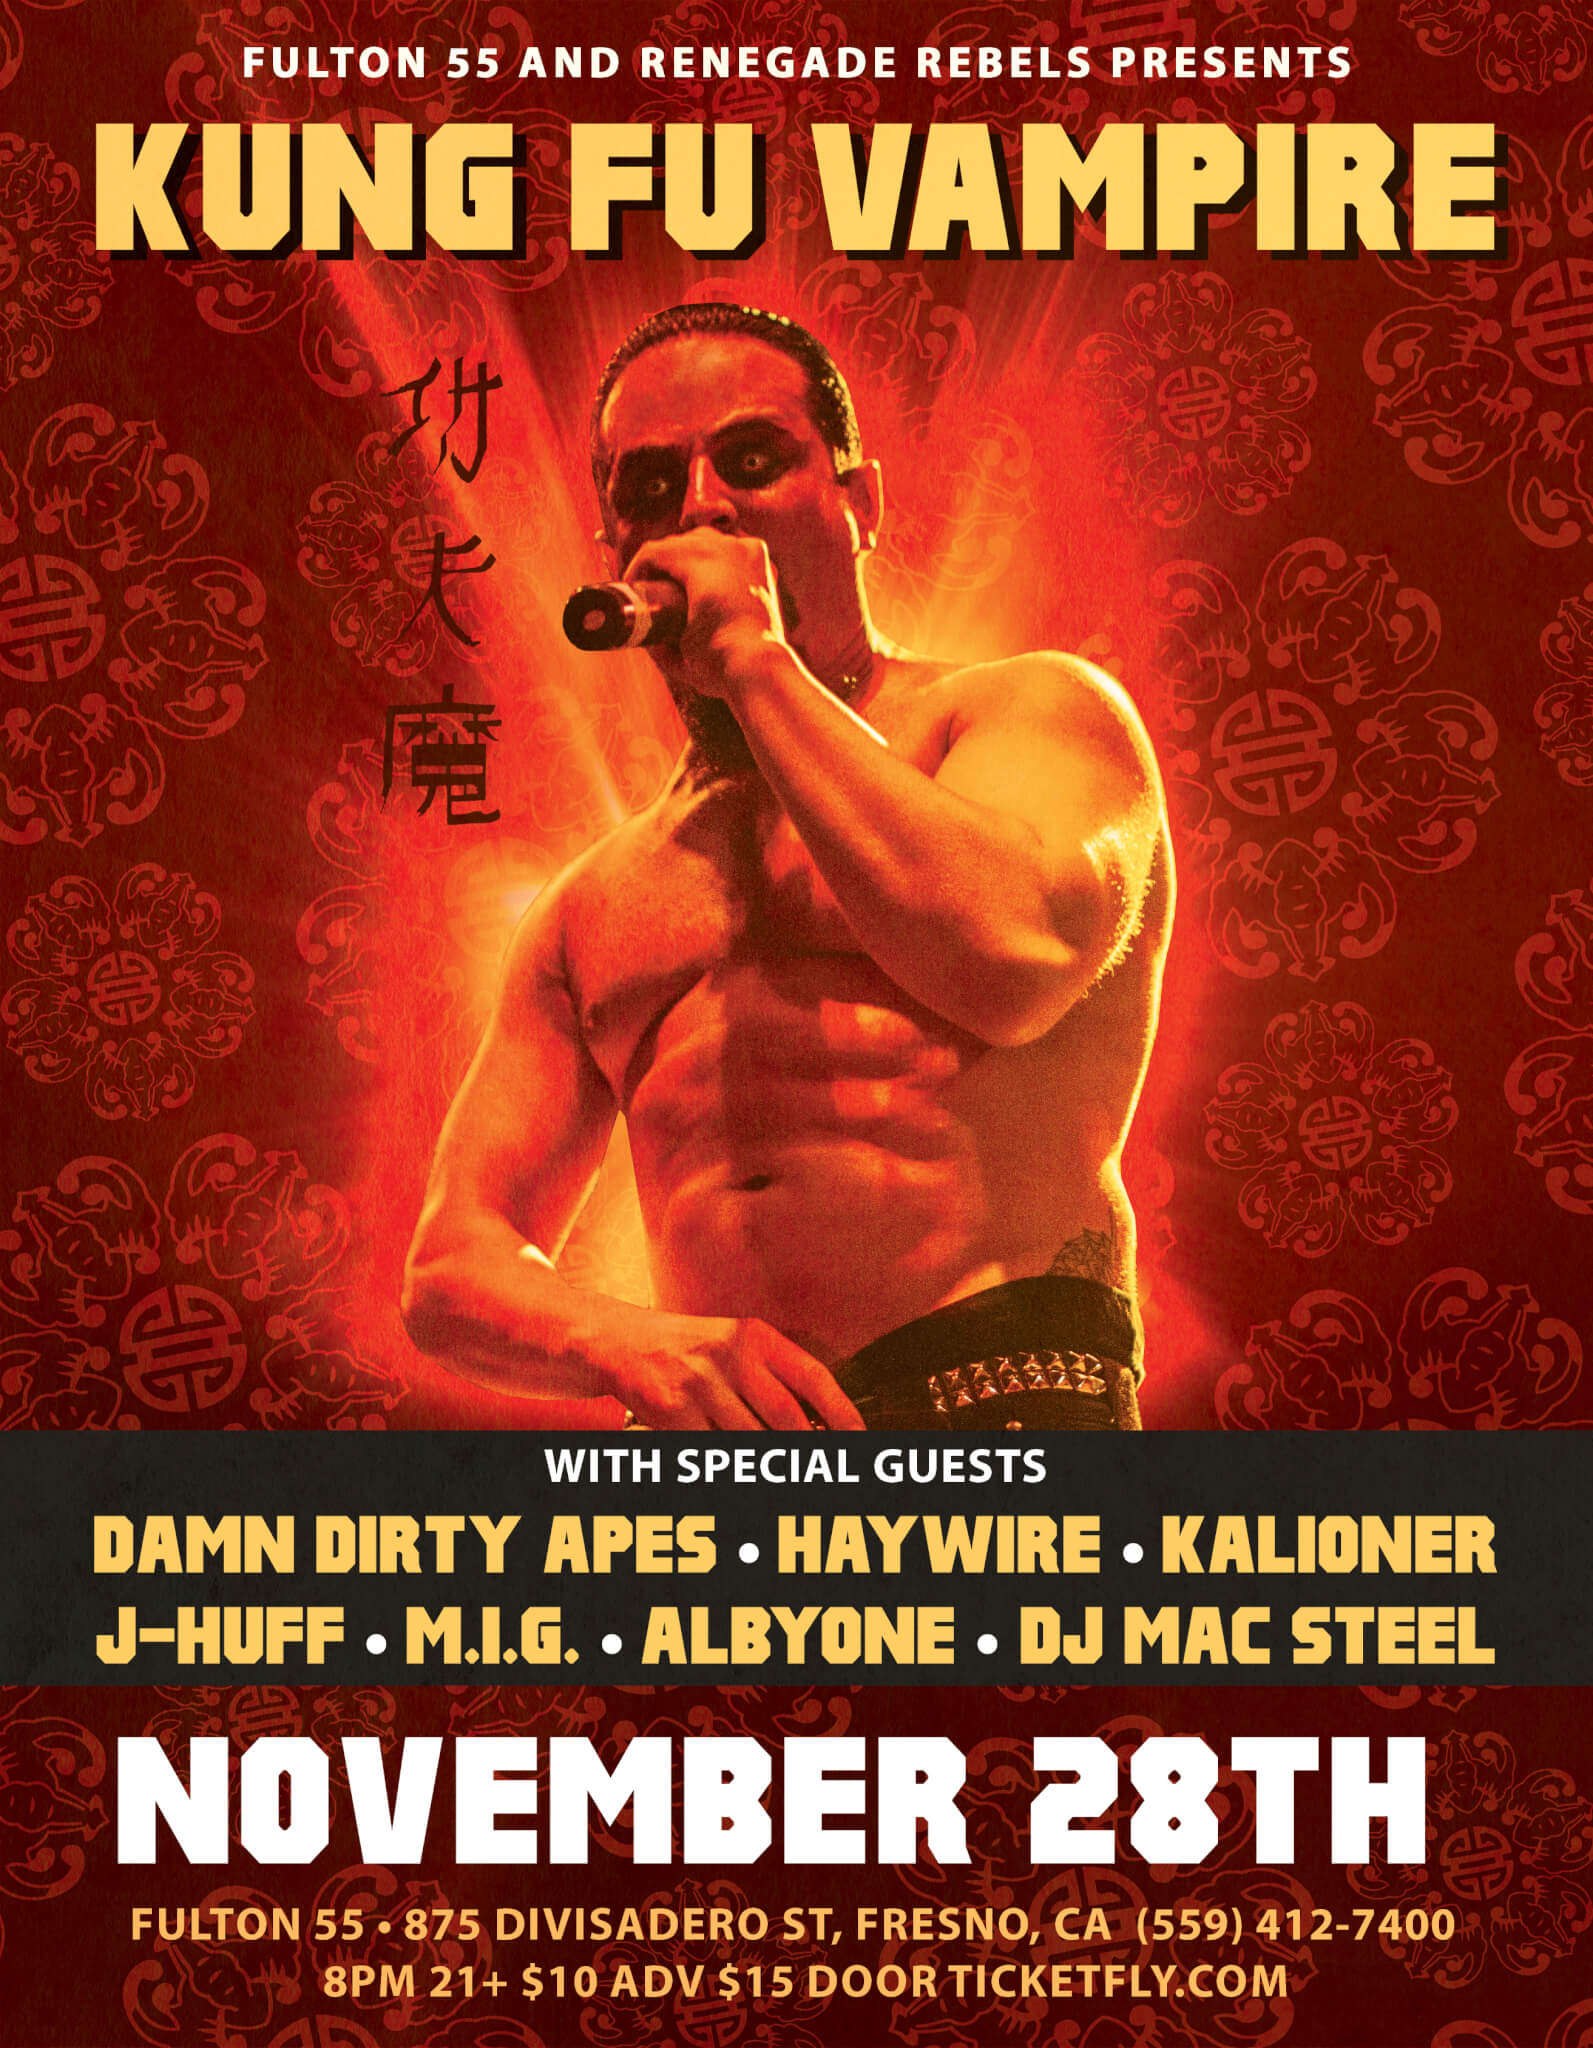 Kung Fu Vampire invades Fresno, CA – Nov. 28th